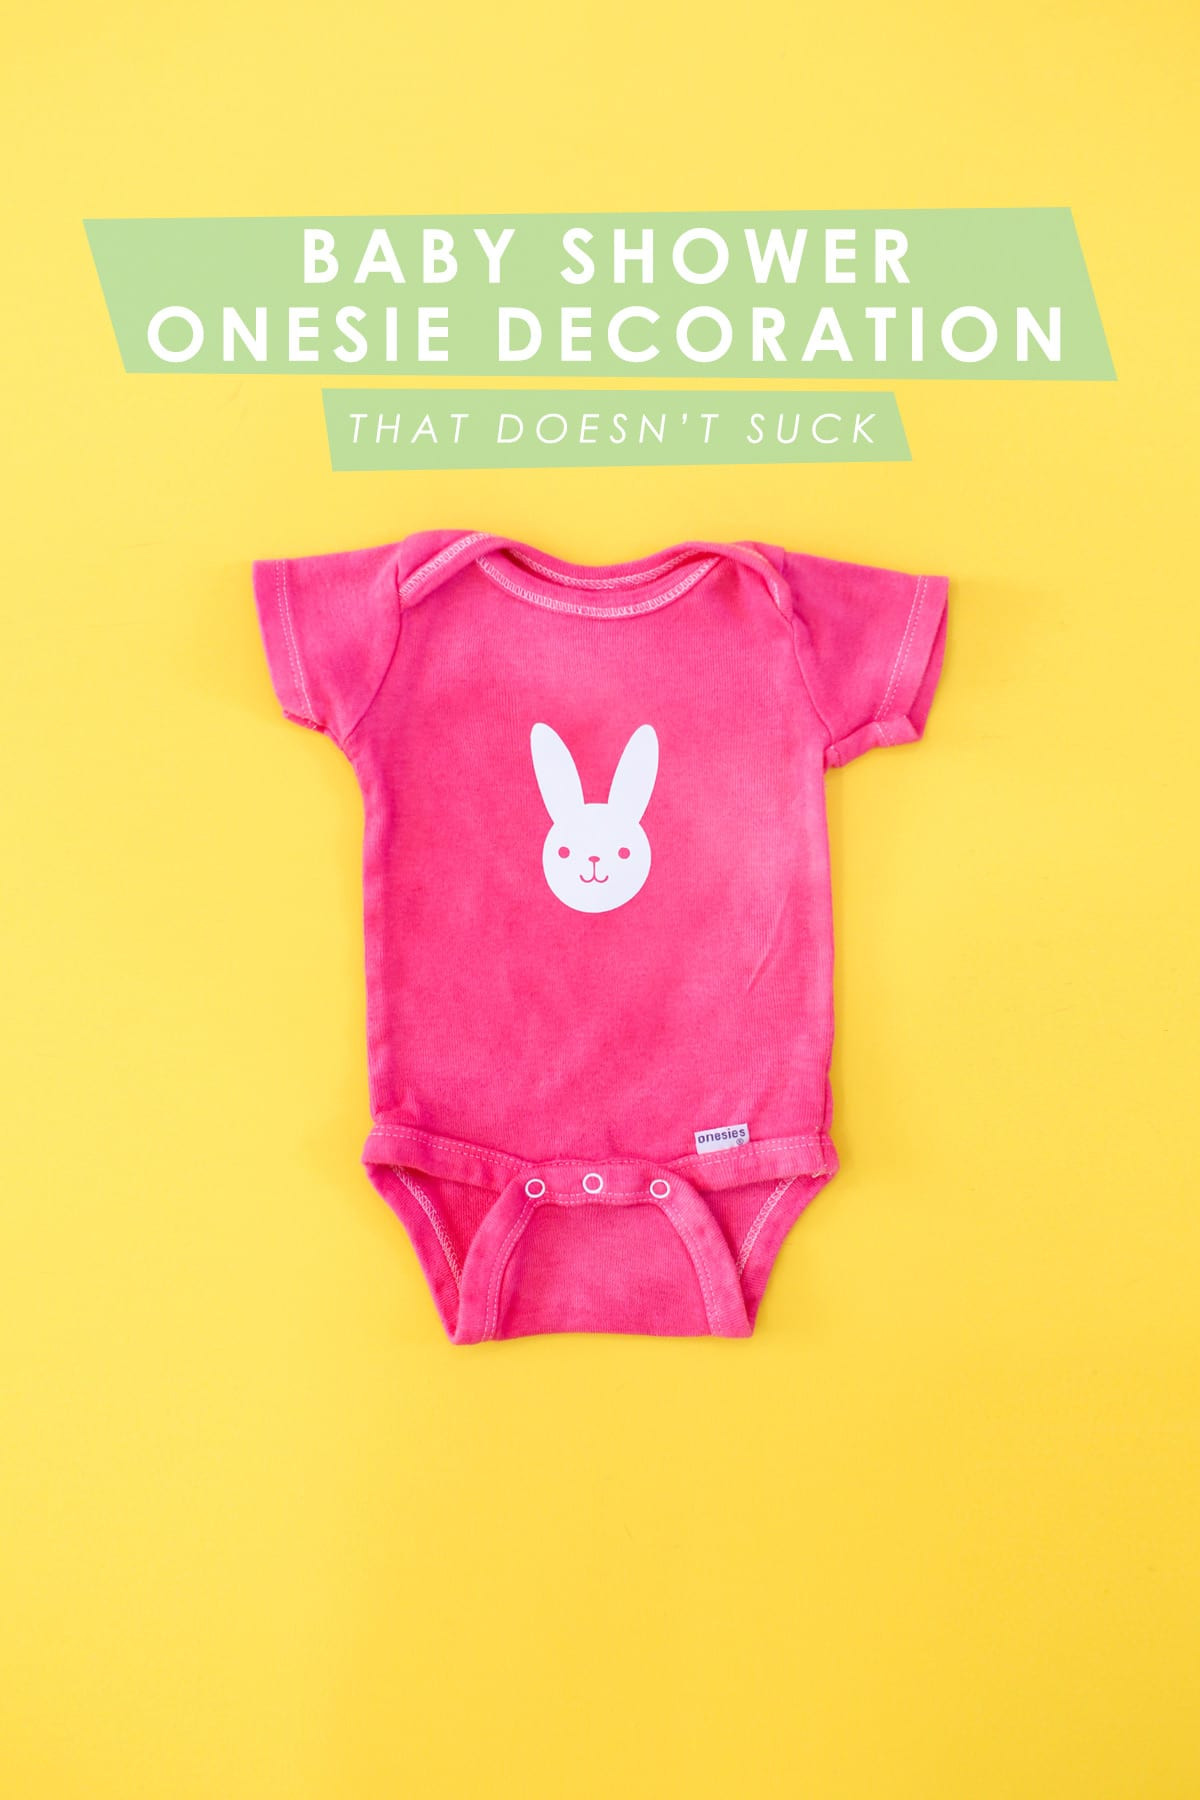 Baby Shower Onesie Decorating Ideas
 A Baby Shower esie Decorating Station That Doesn t Suck